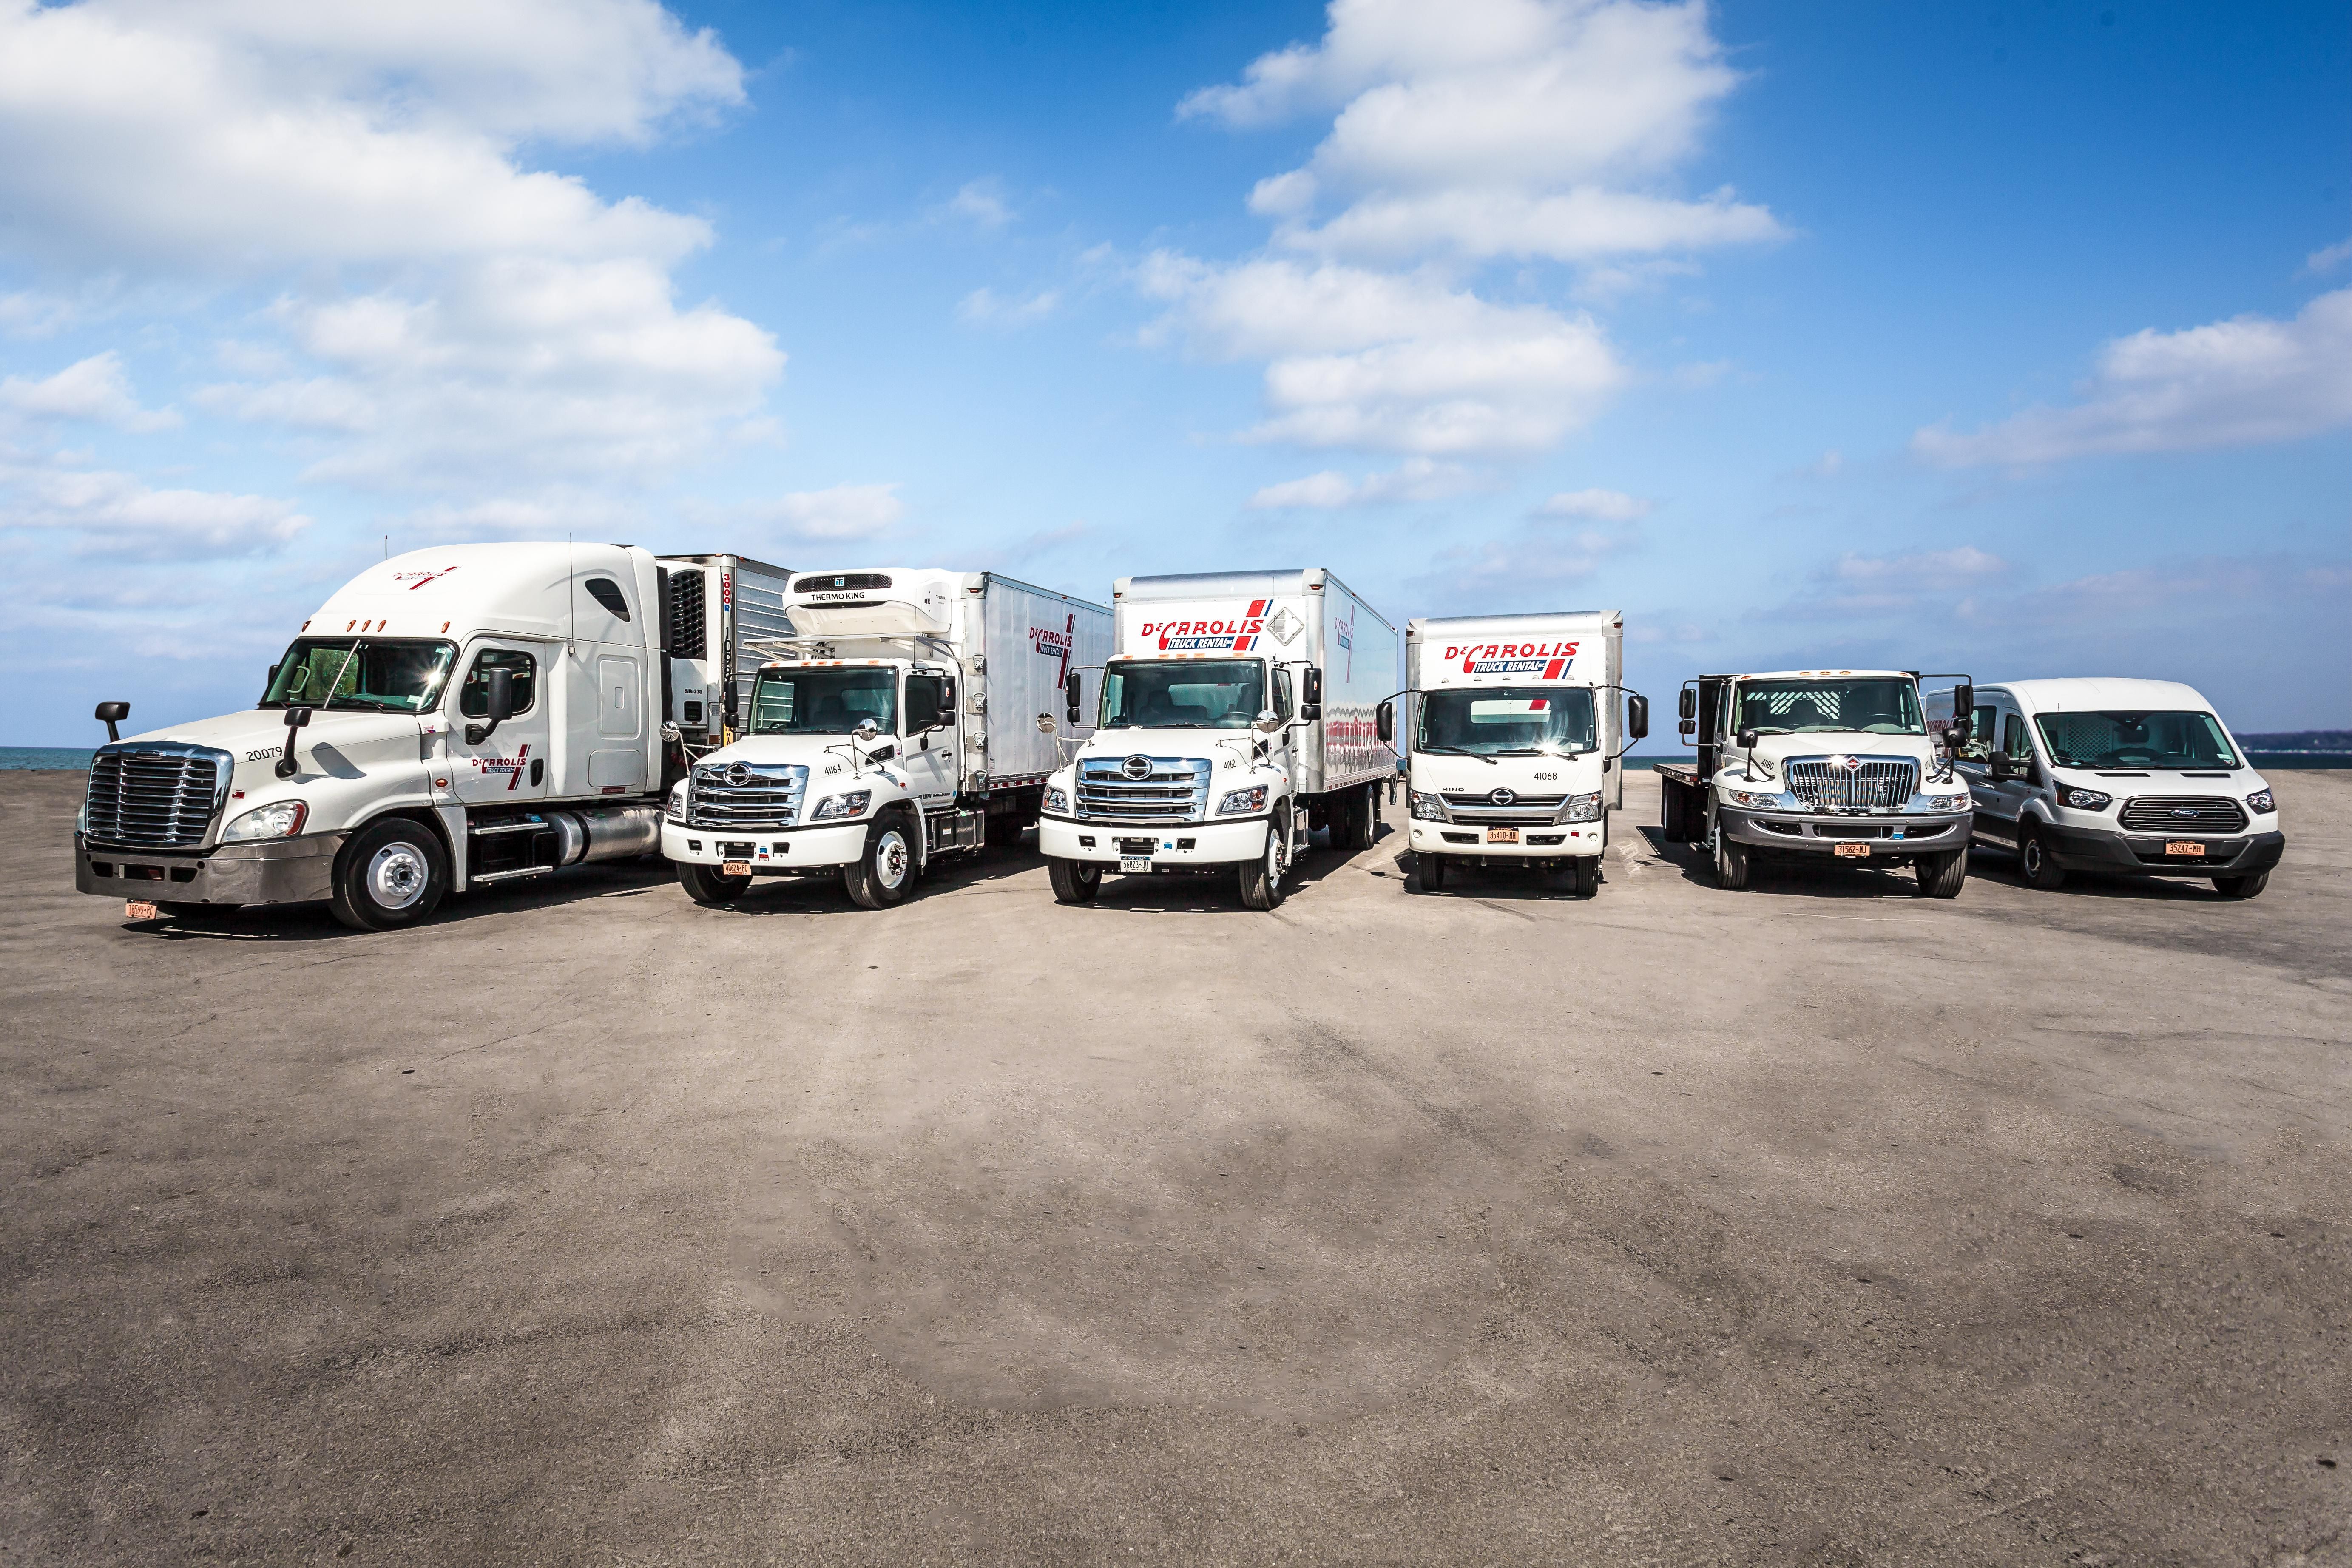 Penske Truck Leasing to Acquire DeCarolis Truck Rental Inc.